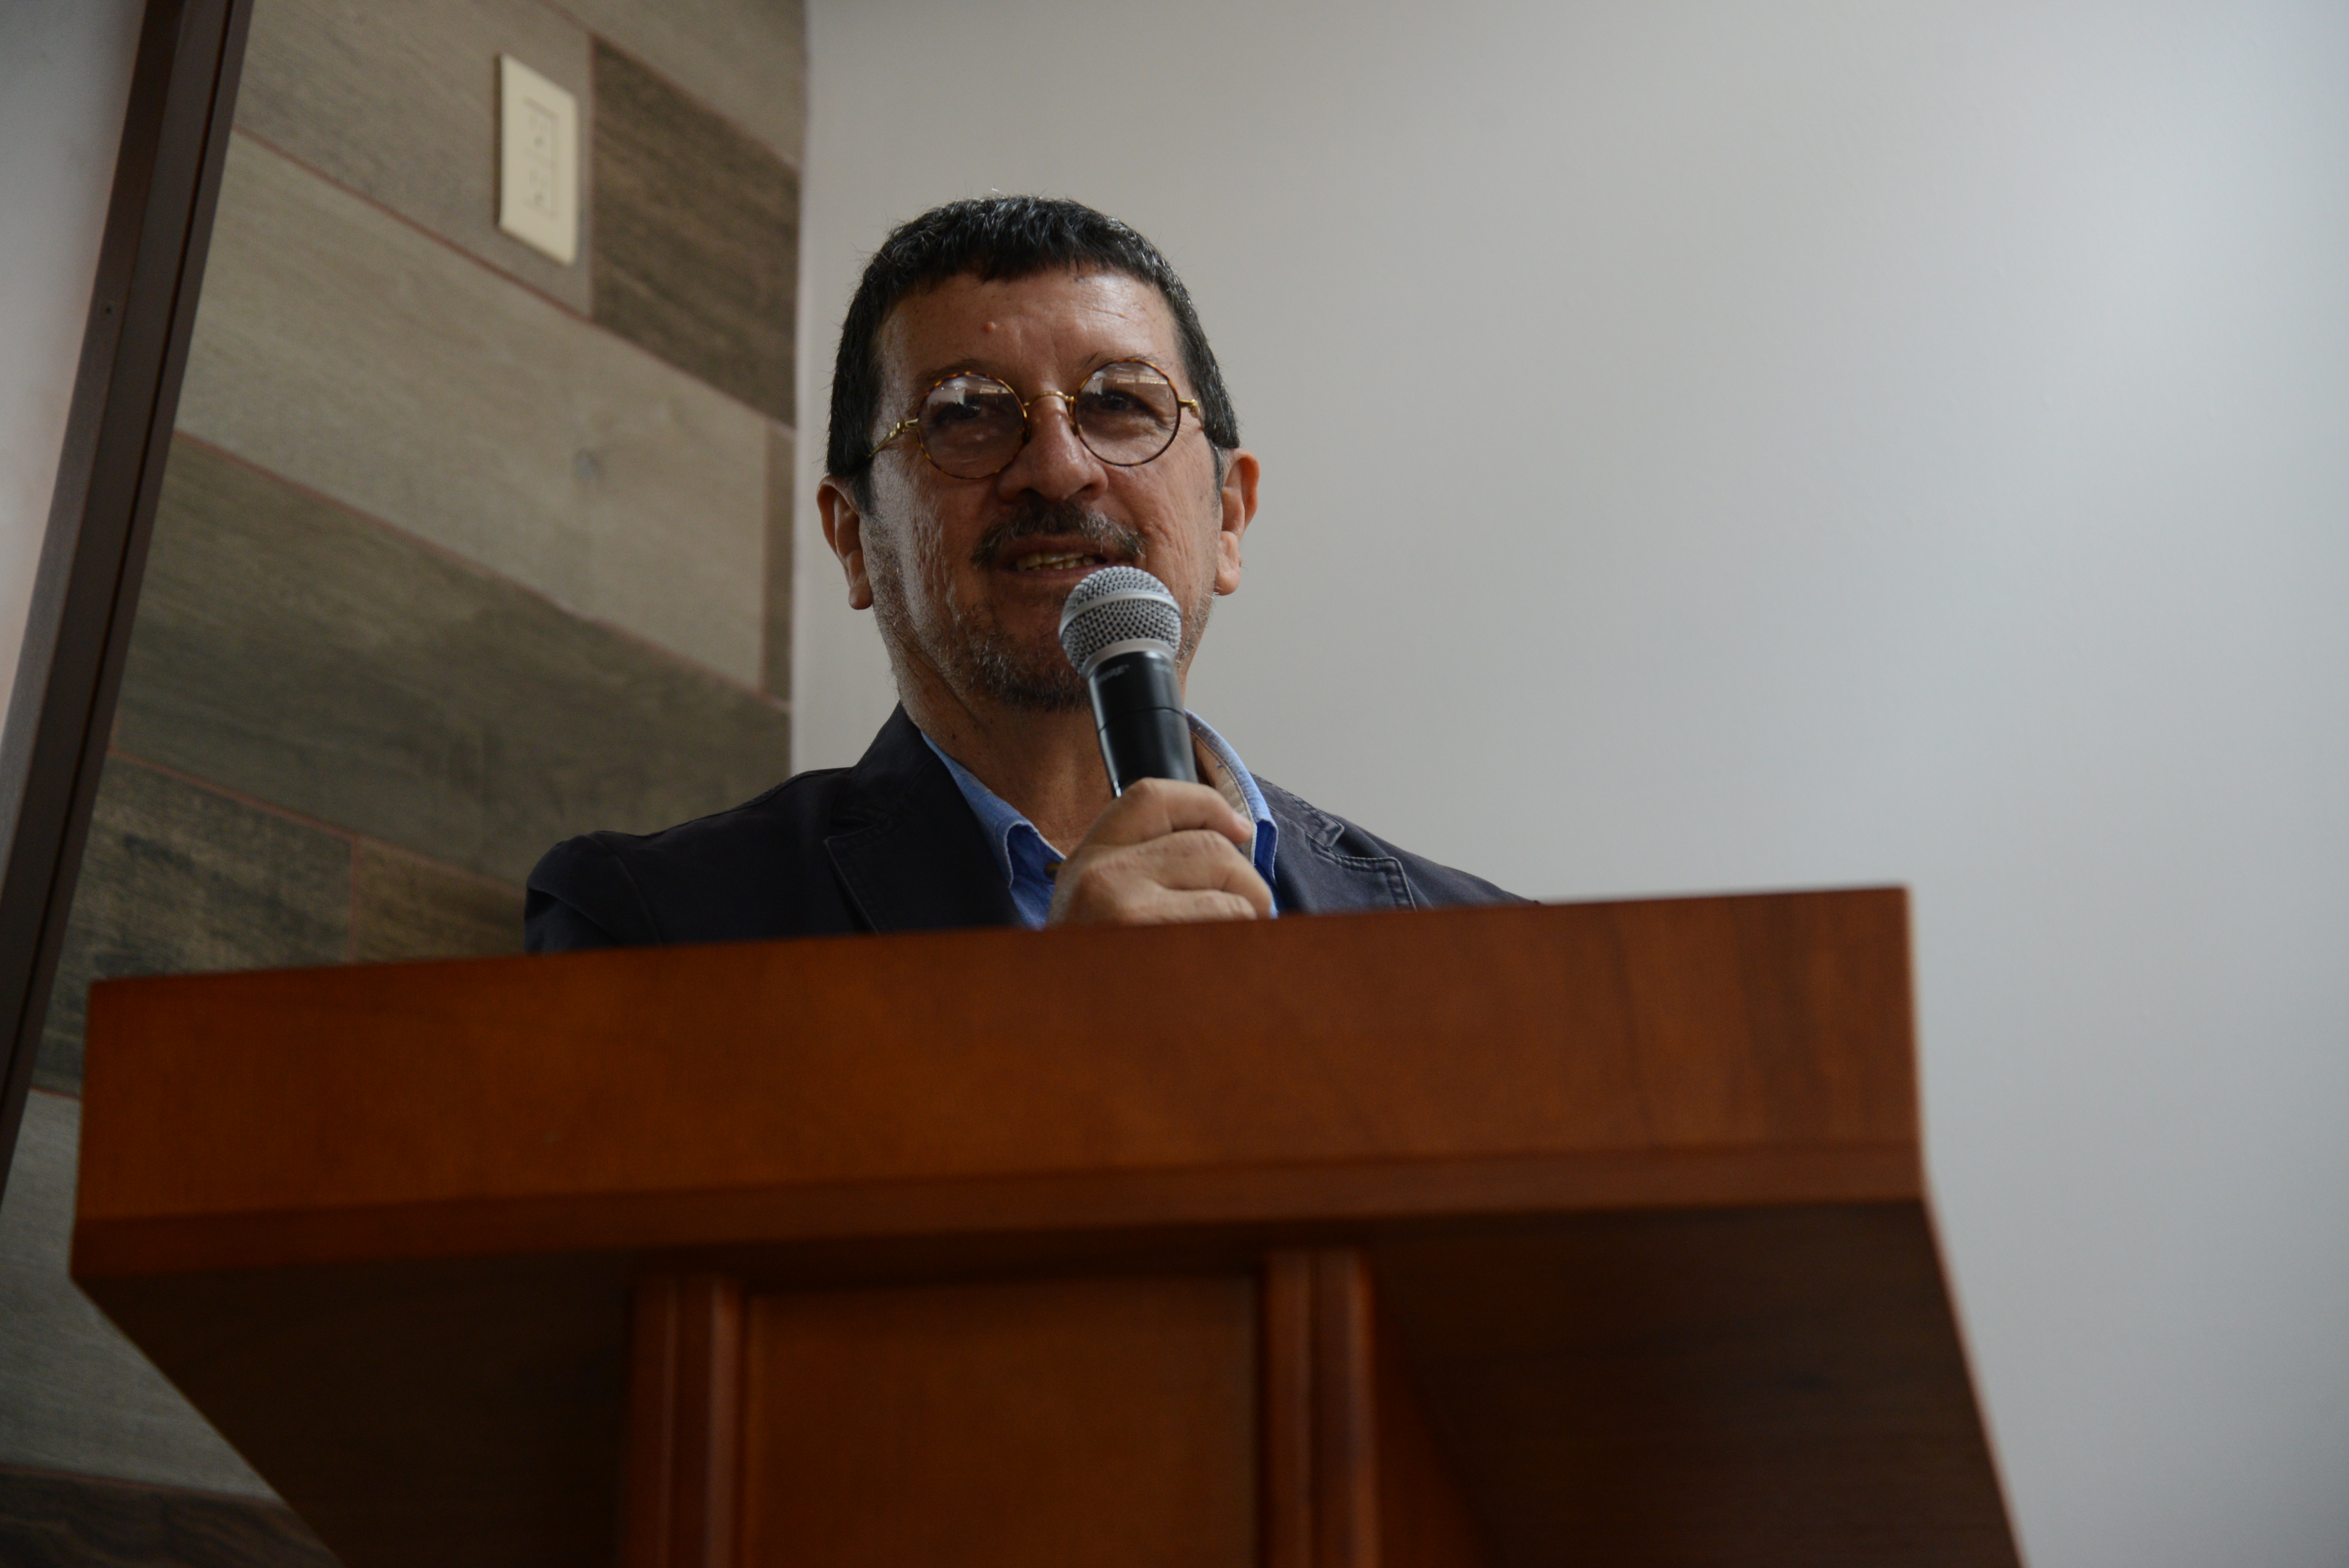 Dr. Rubén Soltero Avelar haciendo uso del micrófono